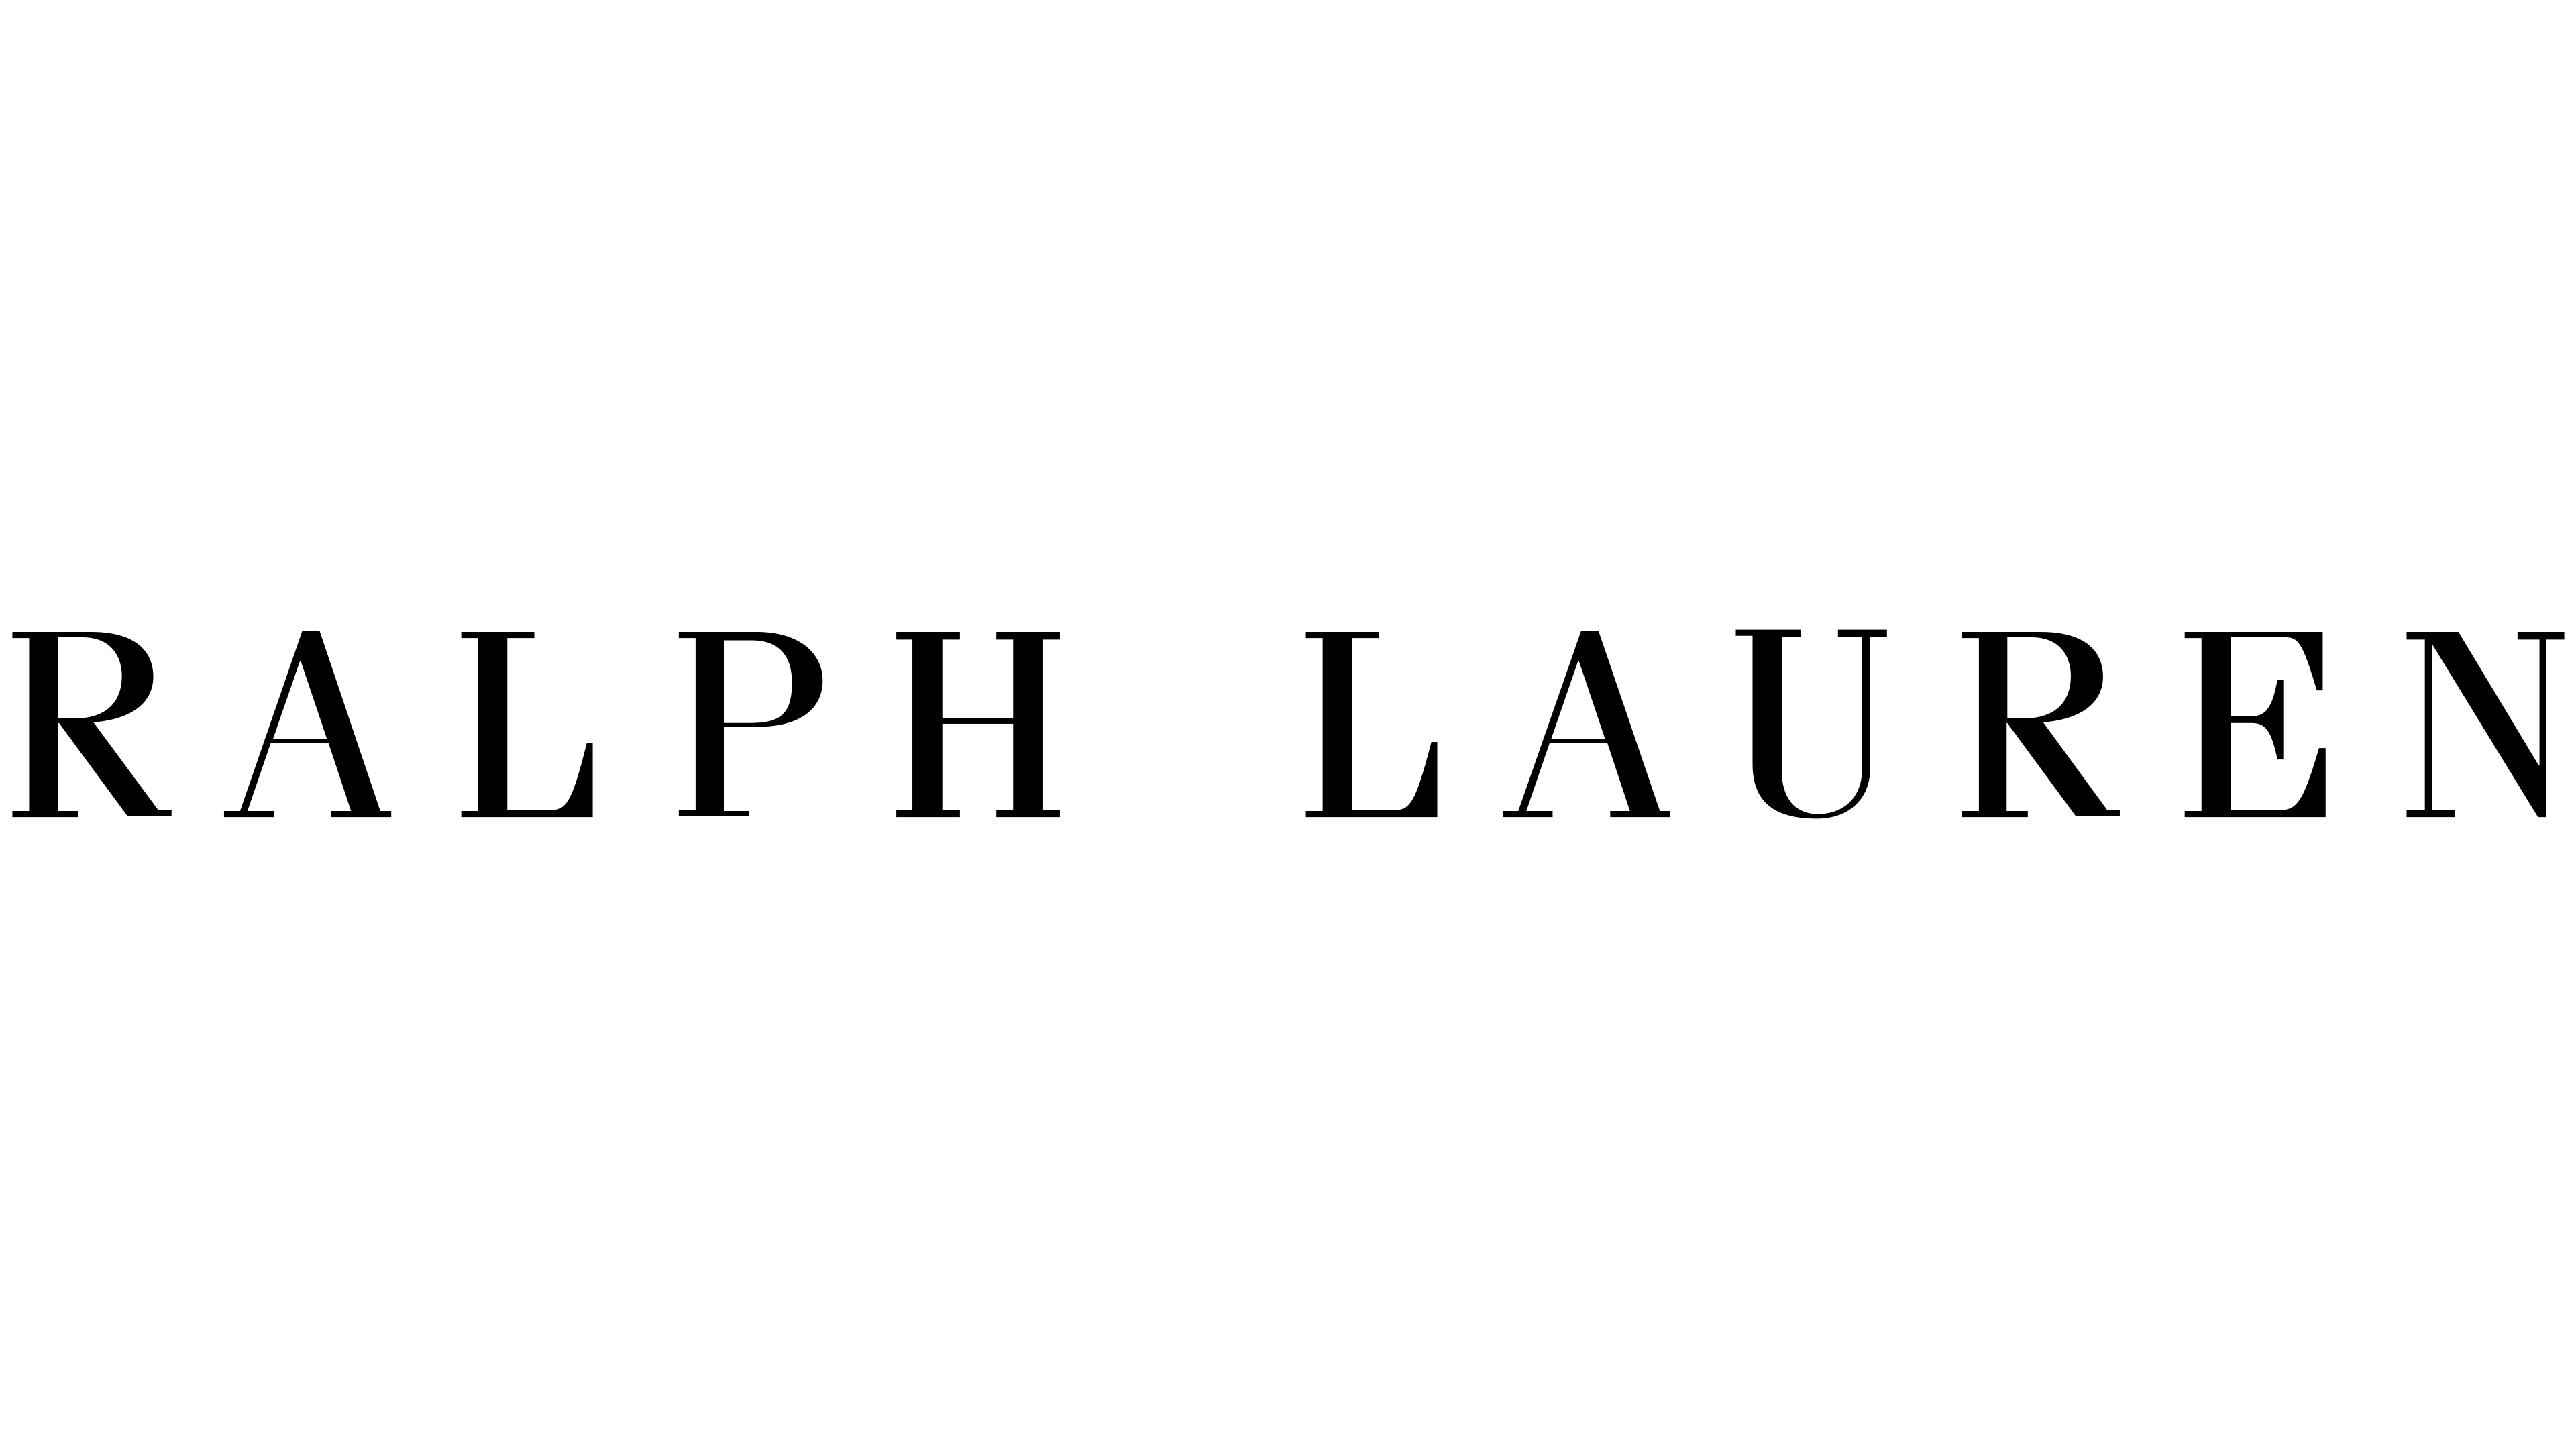 ralph lauren logo png